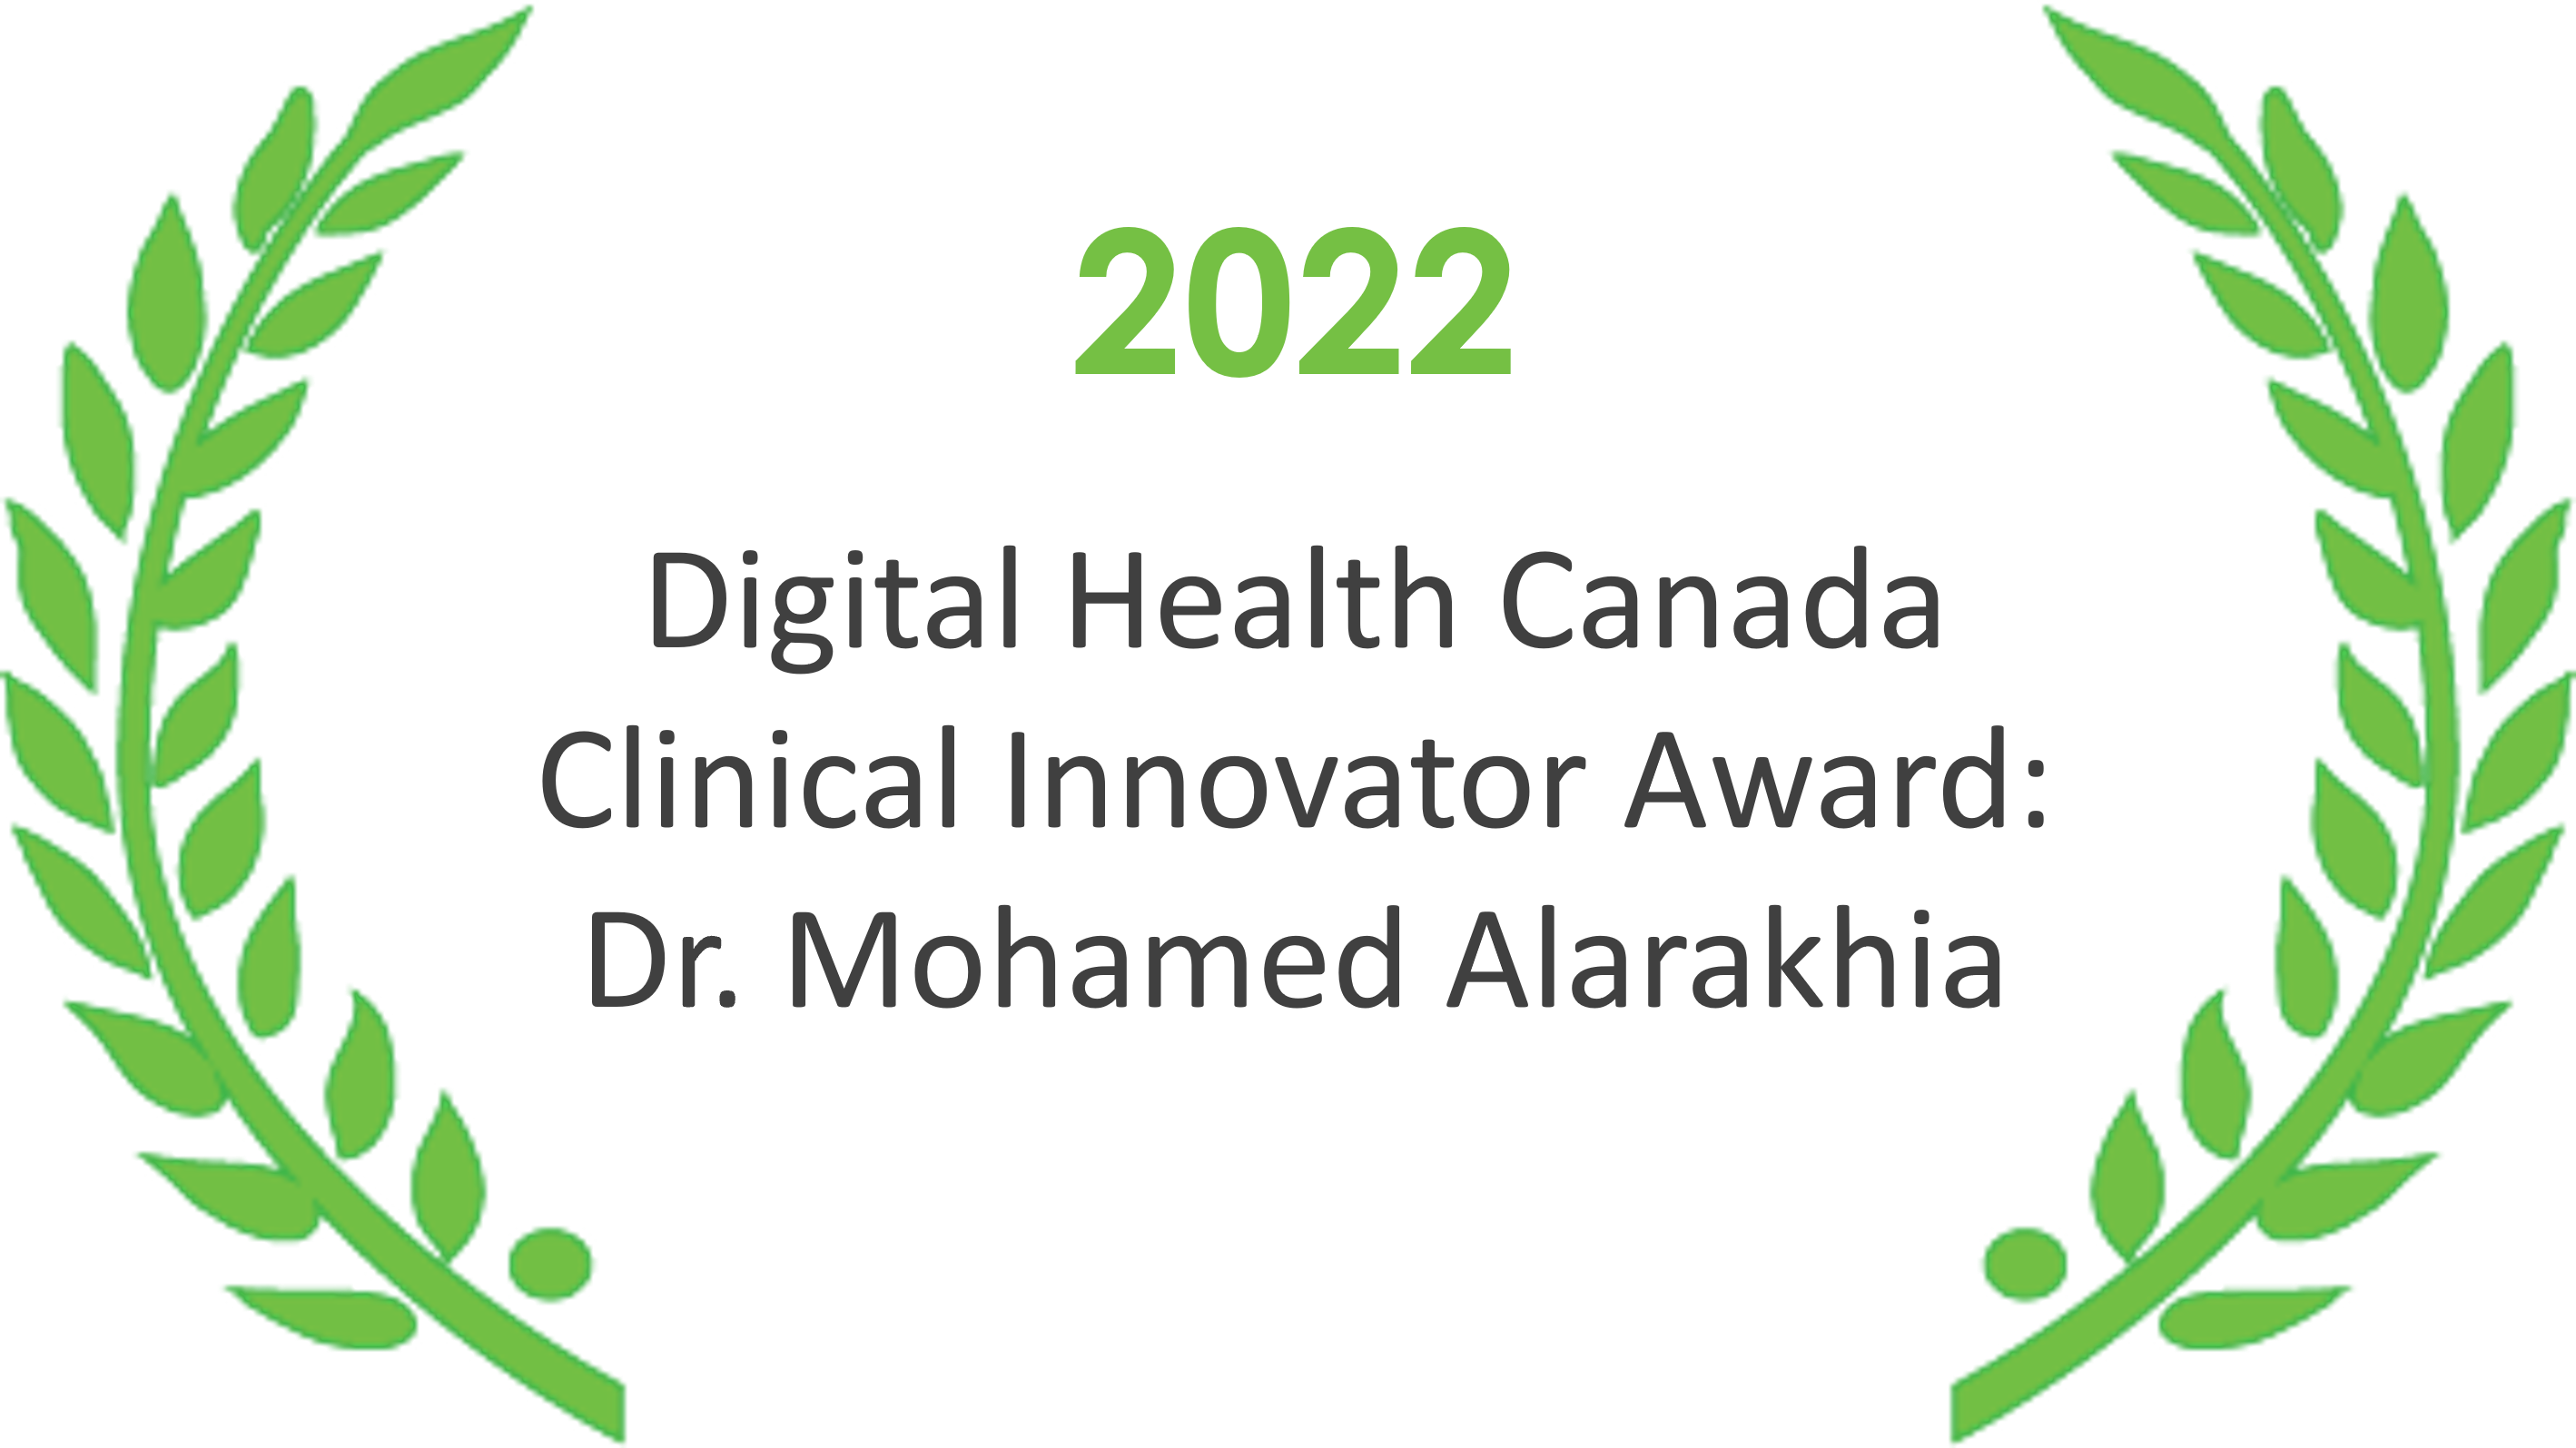 2022 Digital Health Canada Clinical Innovator Award: Dr. Mohamed Alarakhia